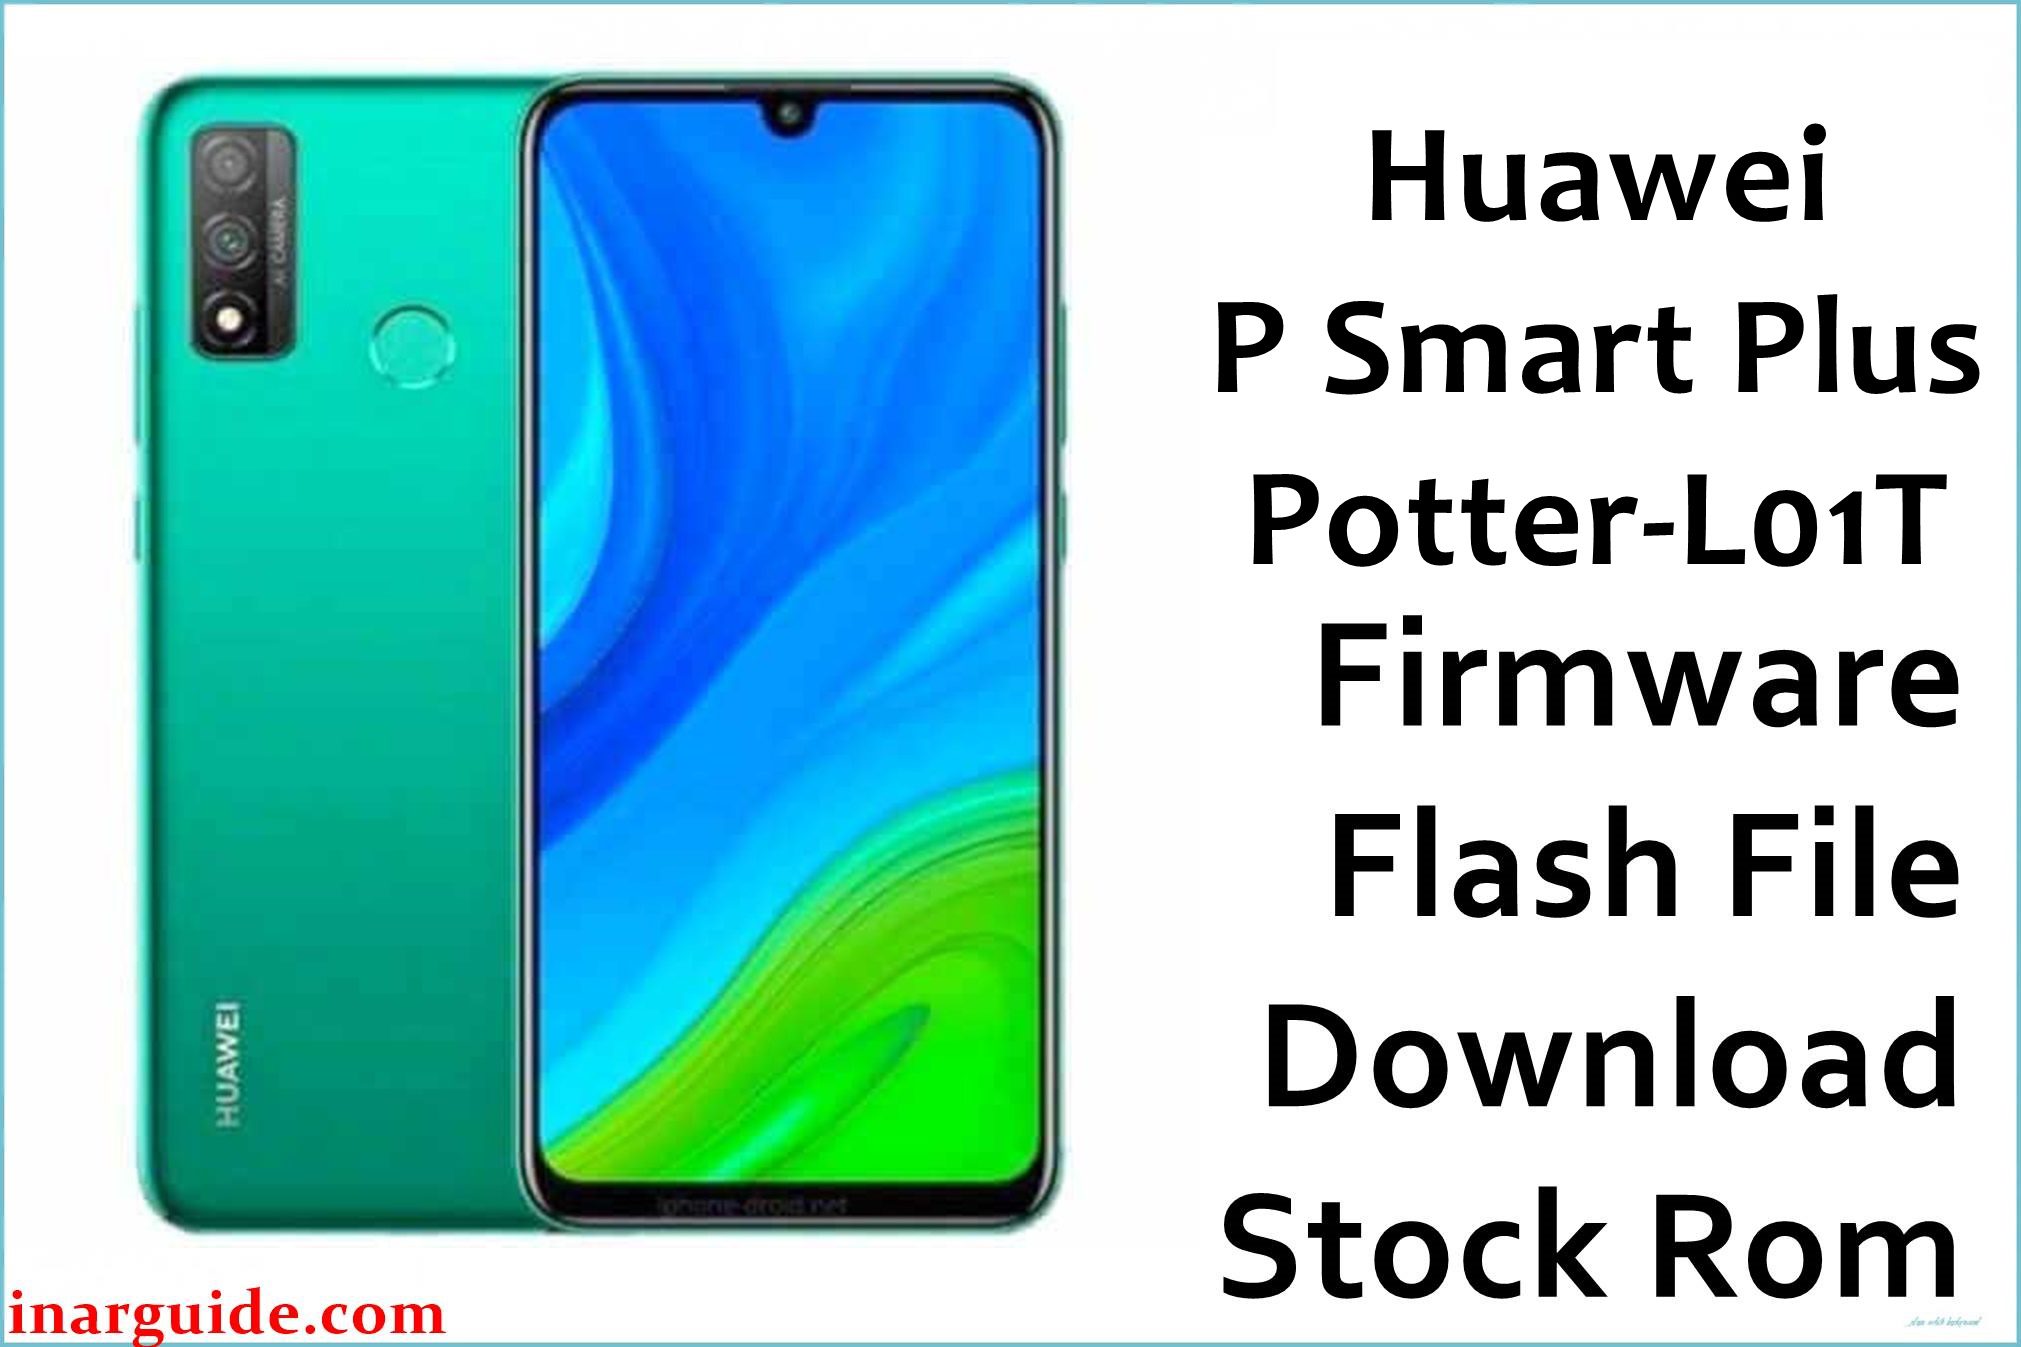 Huawei P Smart Plus Potter L01T